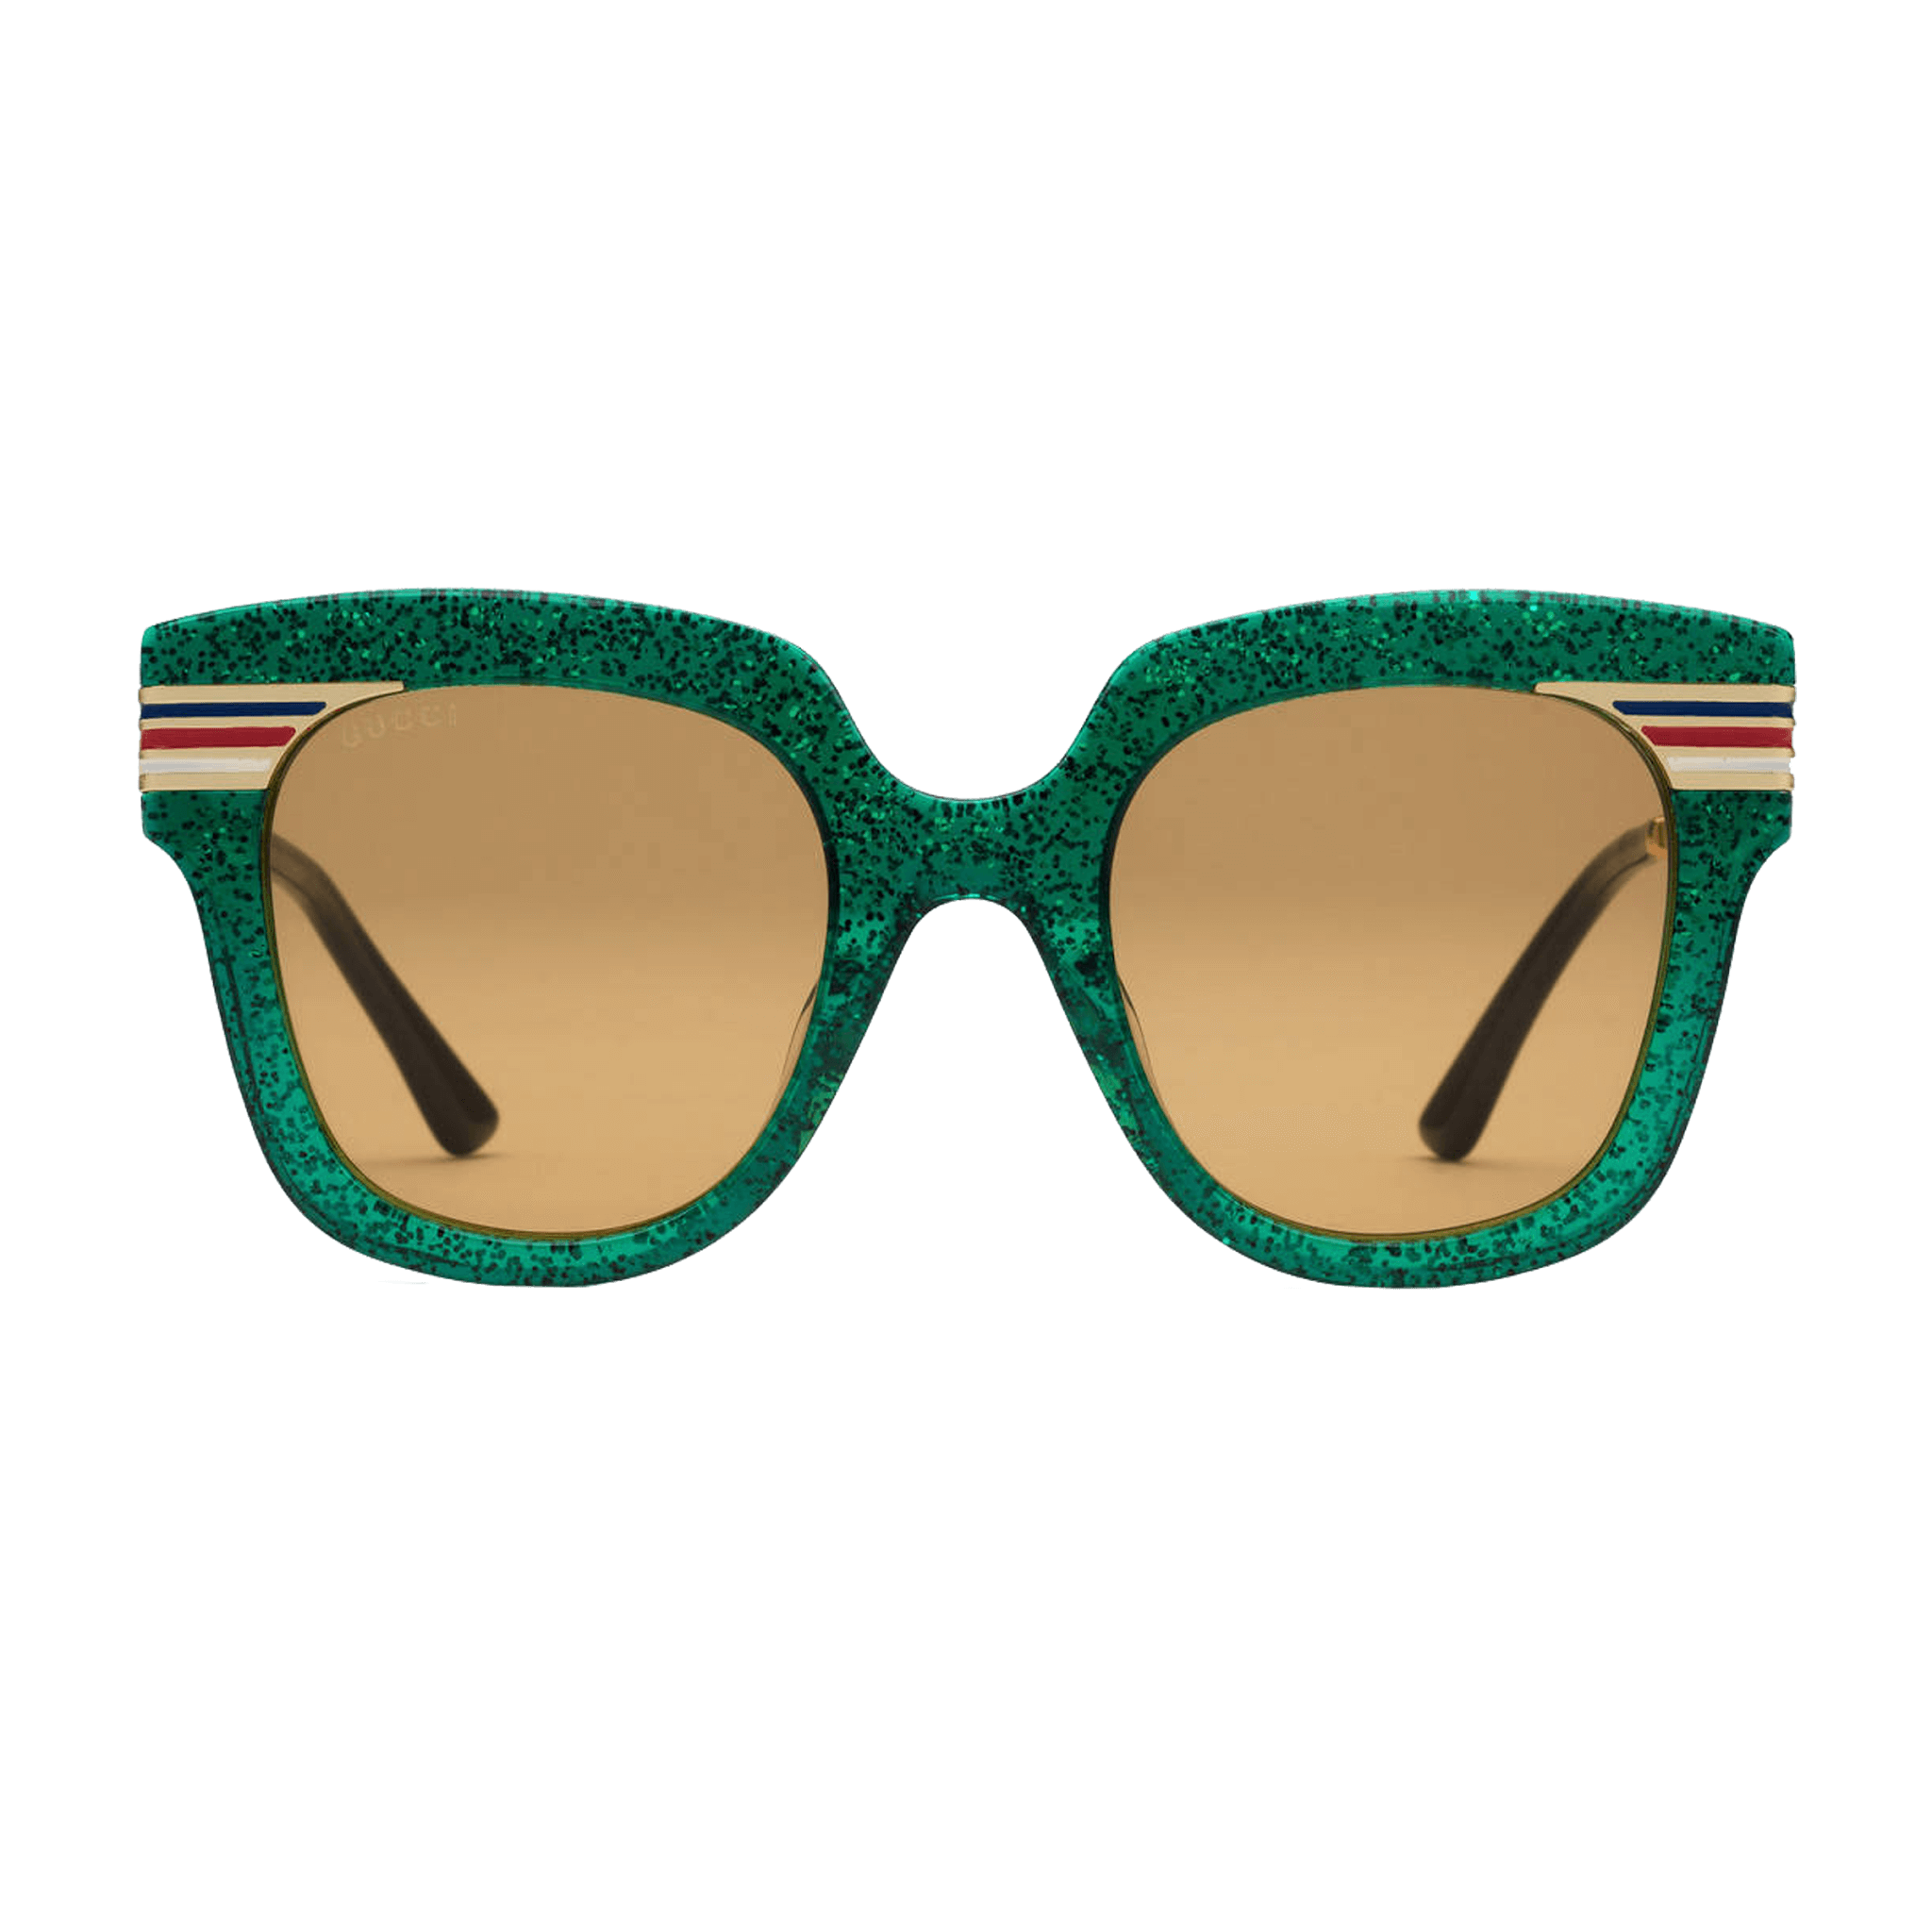 Clipart glasses daiquiri. If sunglasses had superpowers